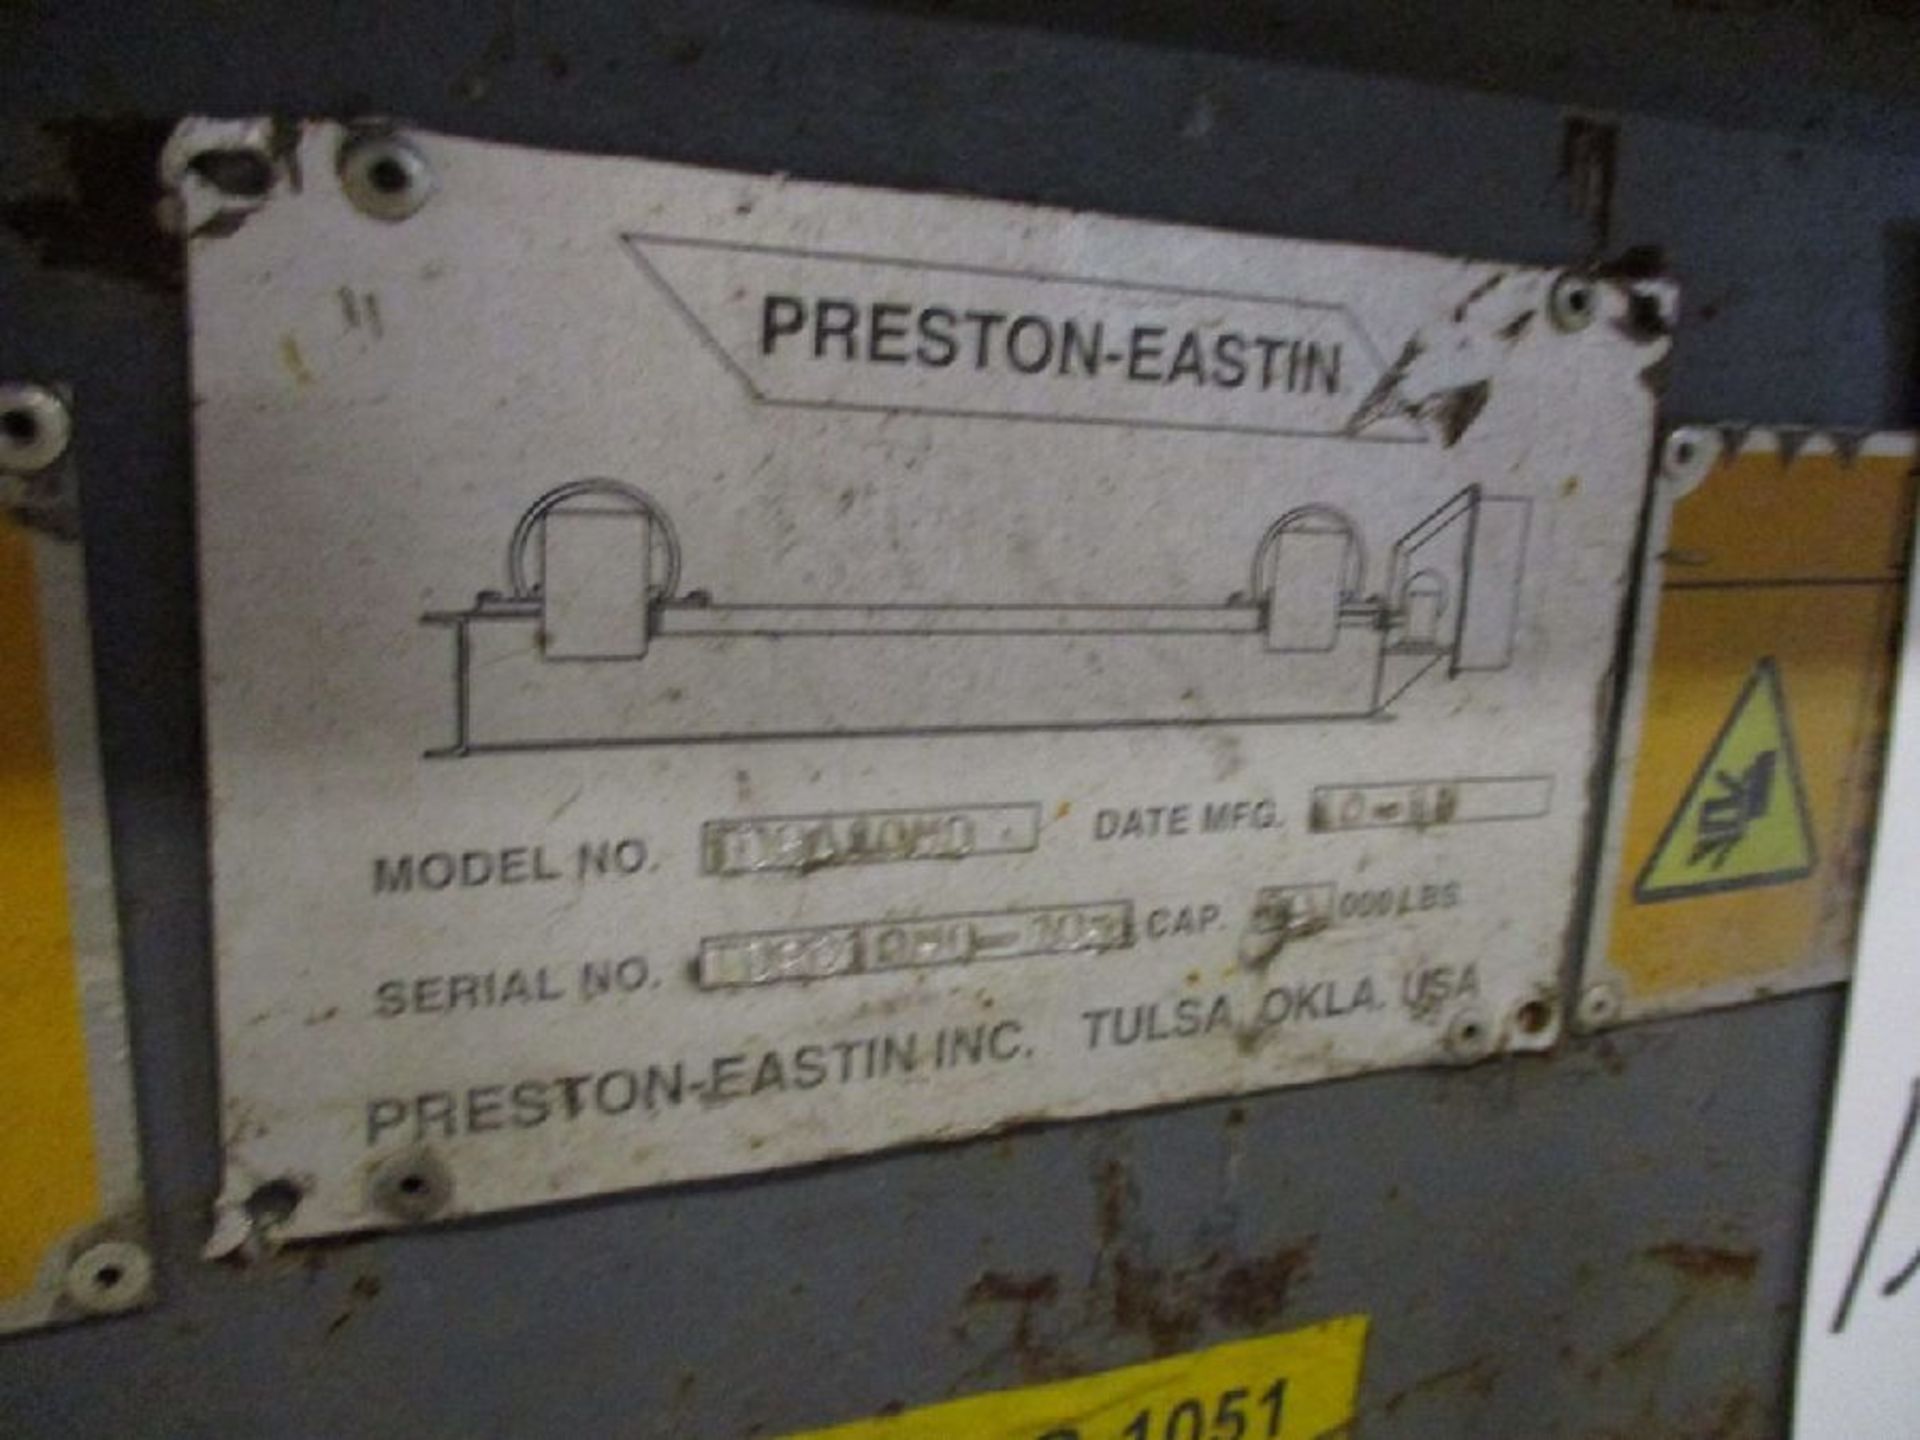 Preston-Eastin Model TDRA10HD 10,000 Lb Capacity Tank Turning Roll - Image 3 of 7